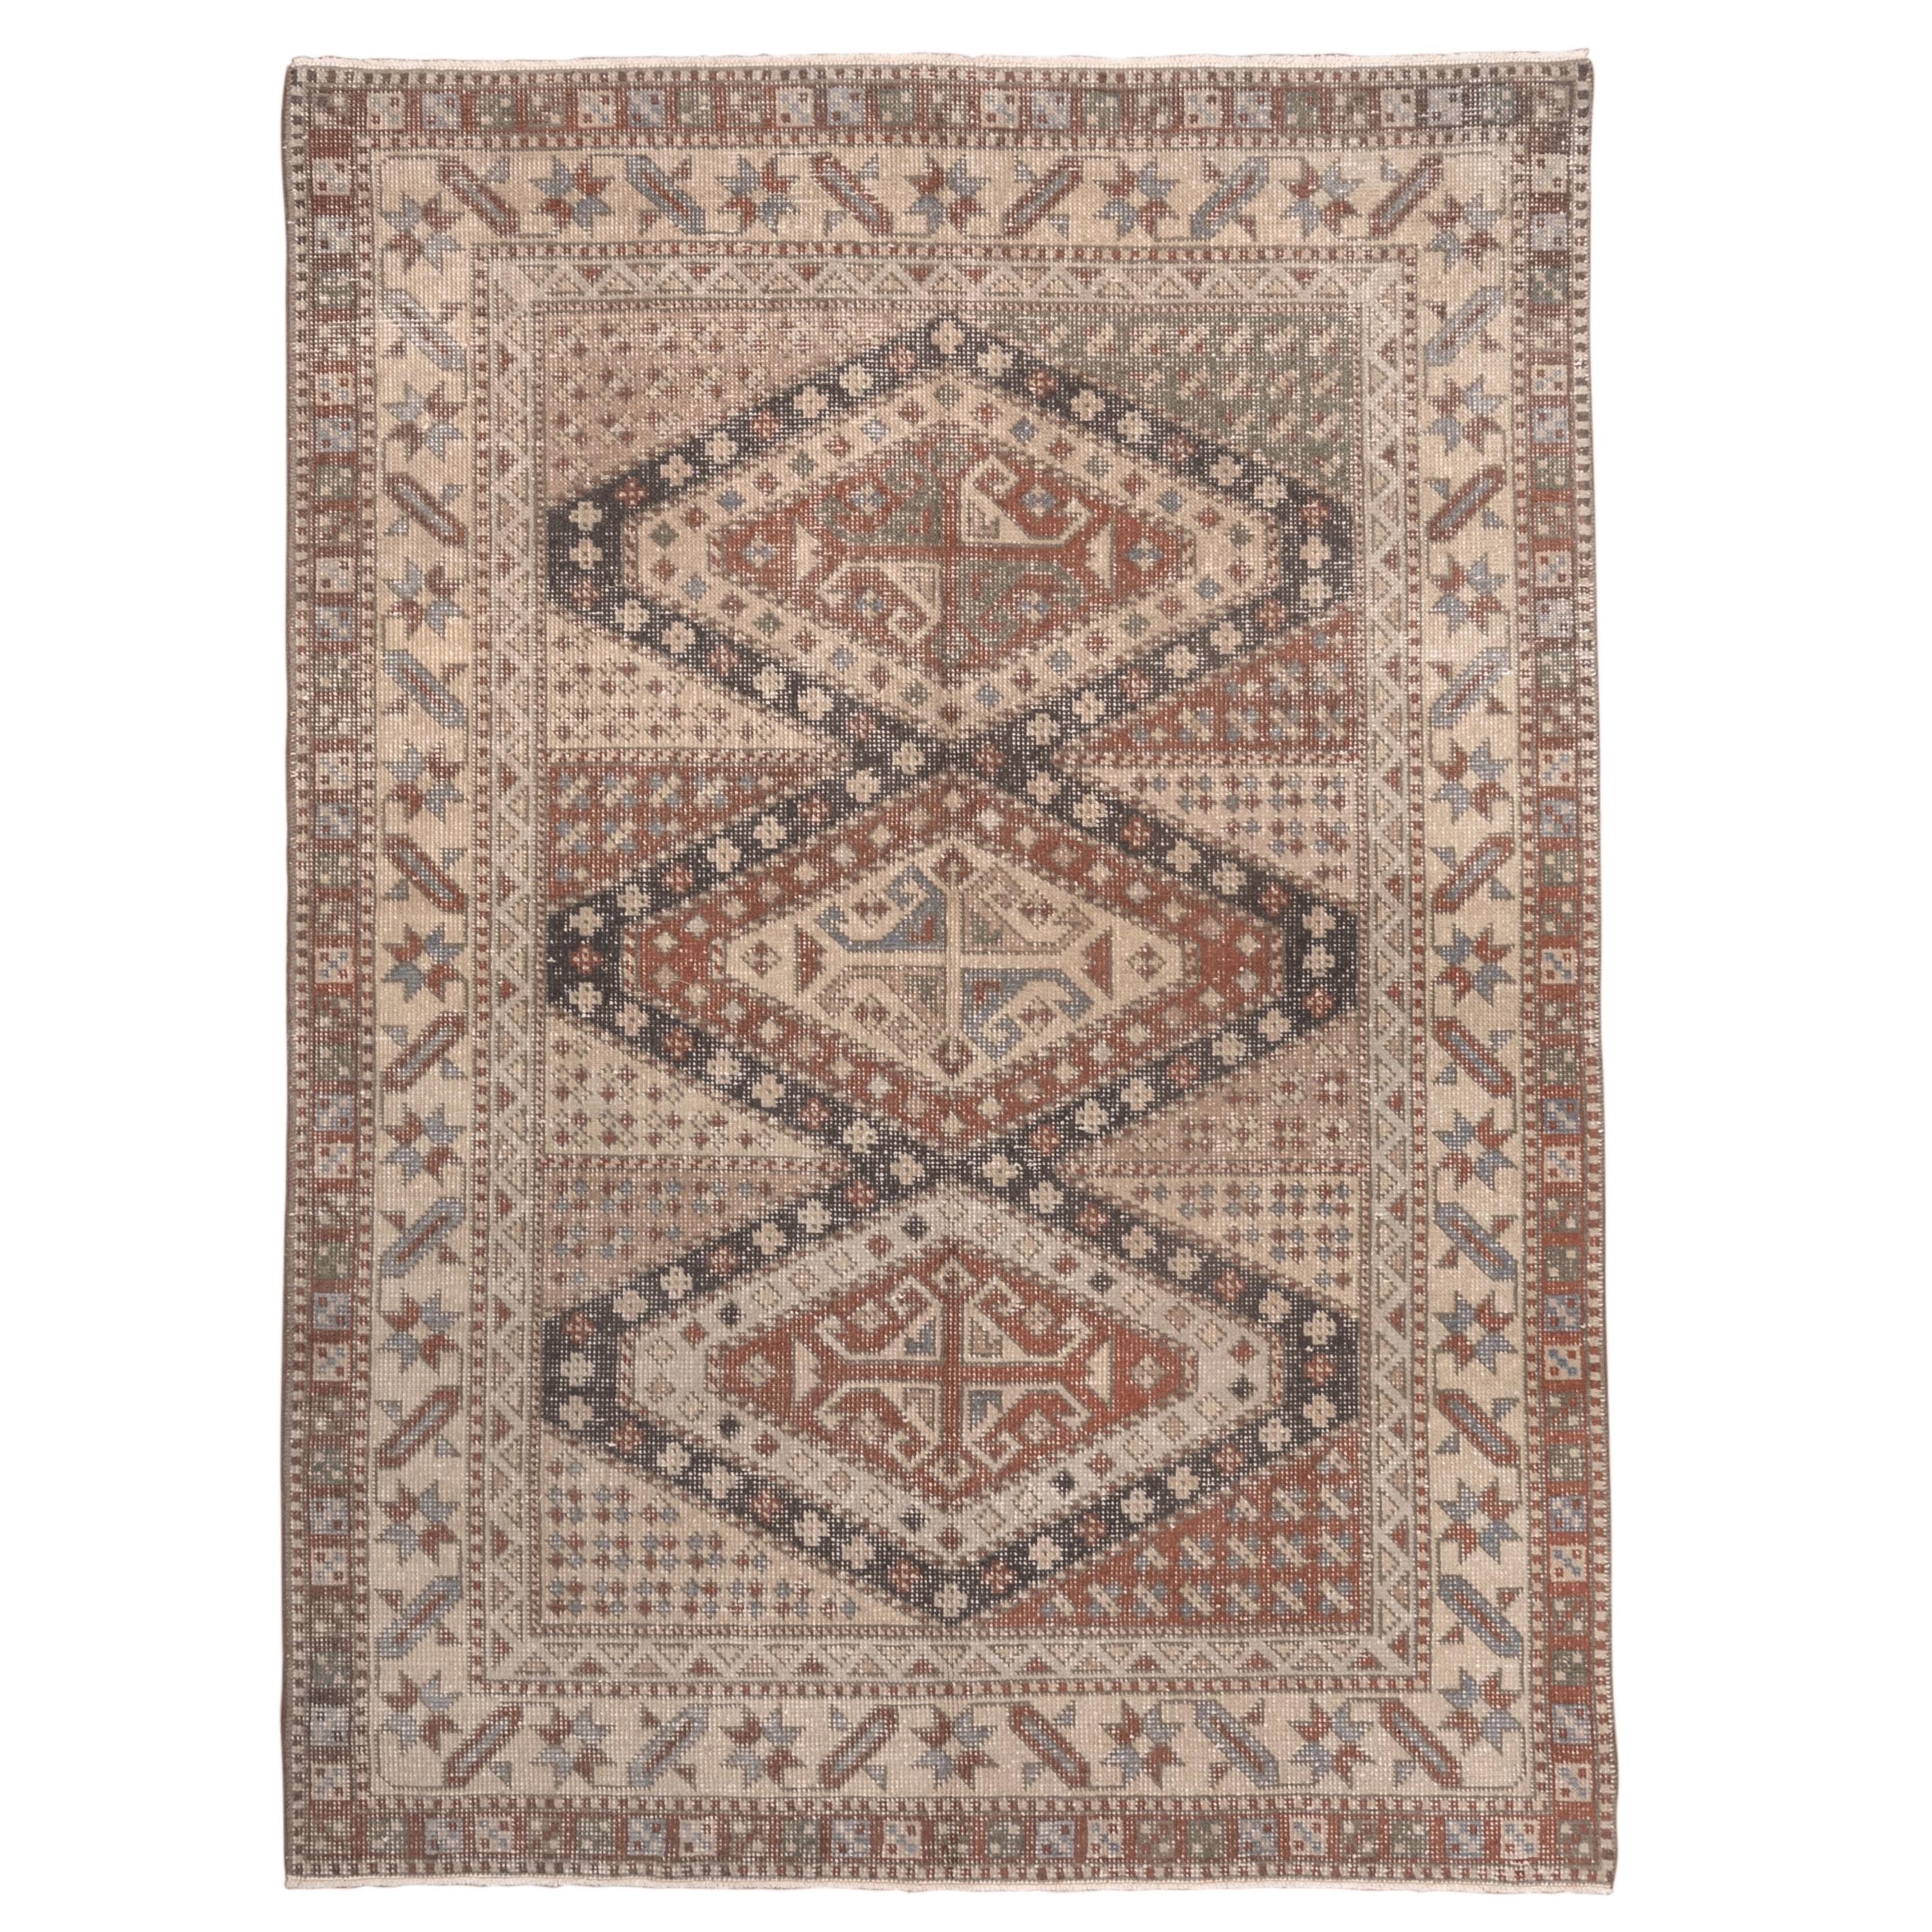 Vintage Tribal Turkish Sparta Carpet Geometric Design, Brown, Ivory & Blue Tones For Sale